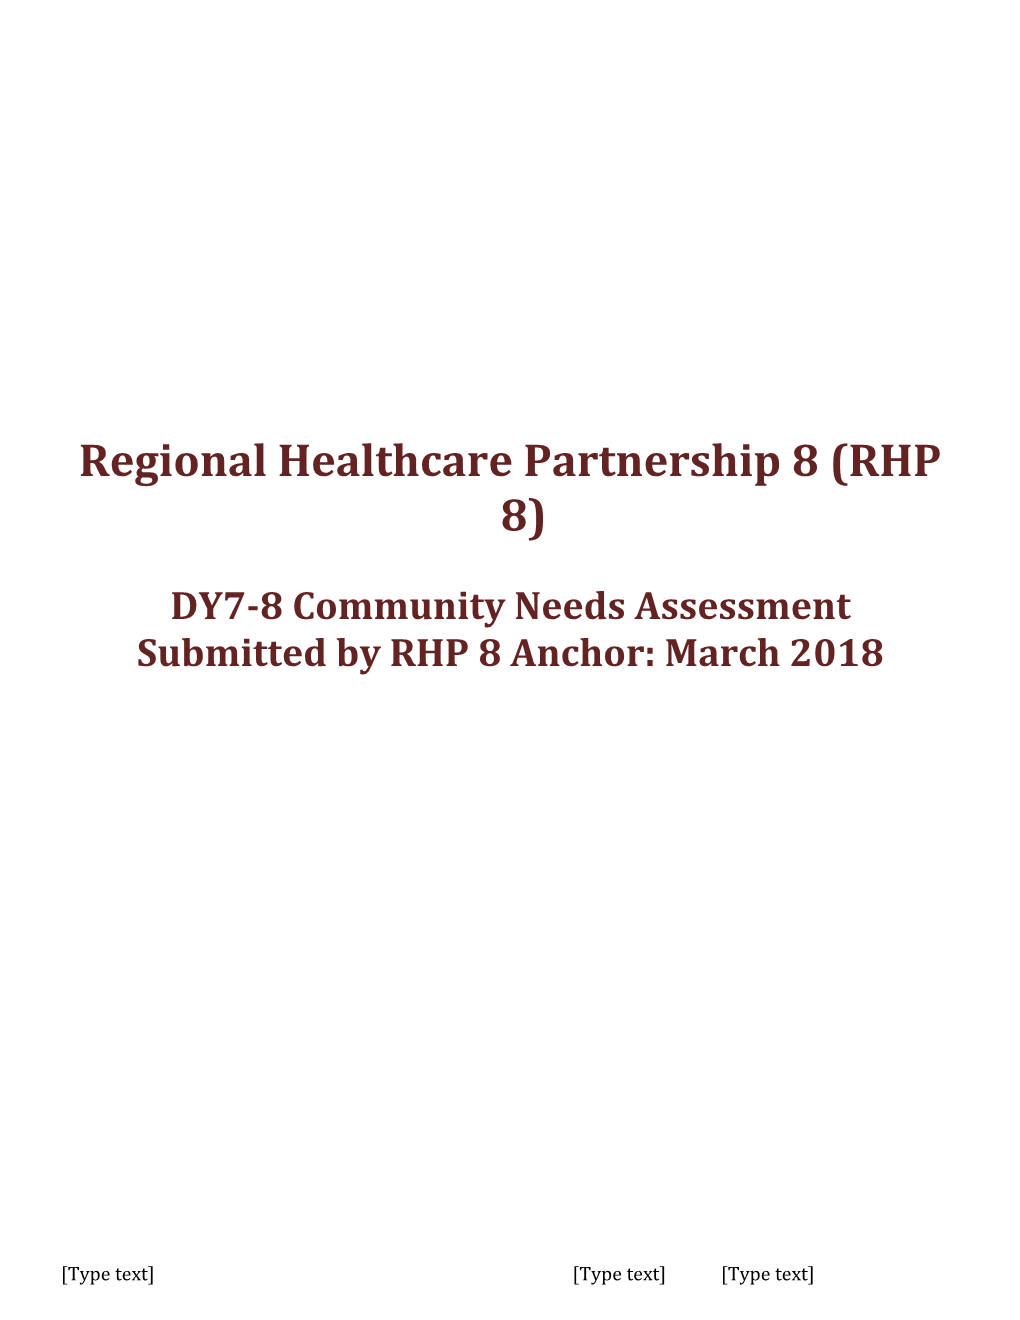 Regional Healthcare Partnership 8 (RHP 8)